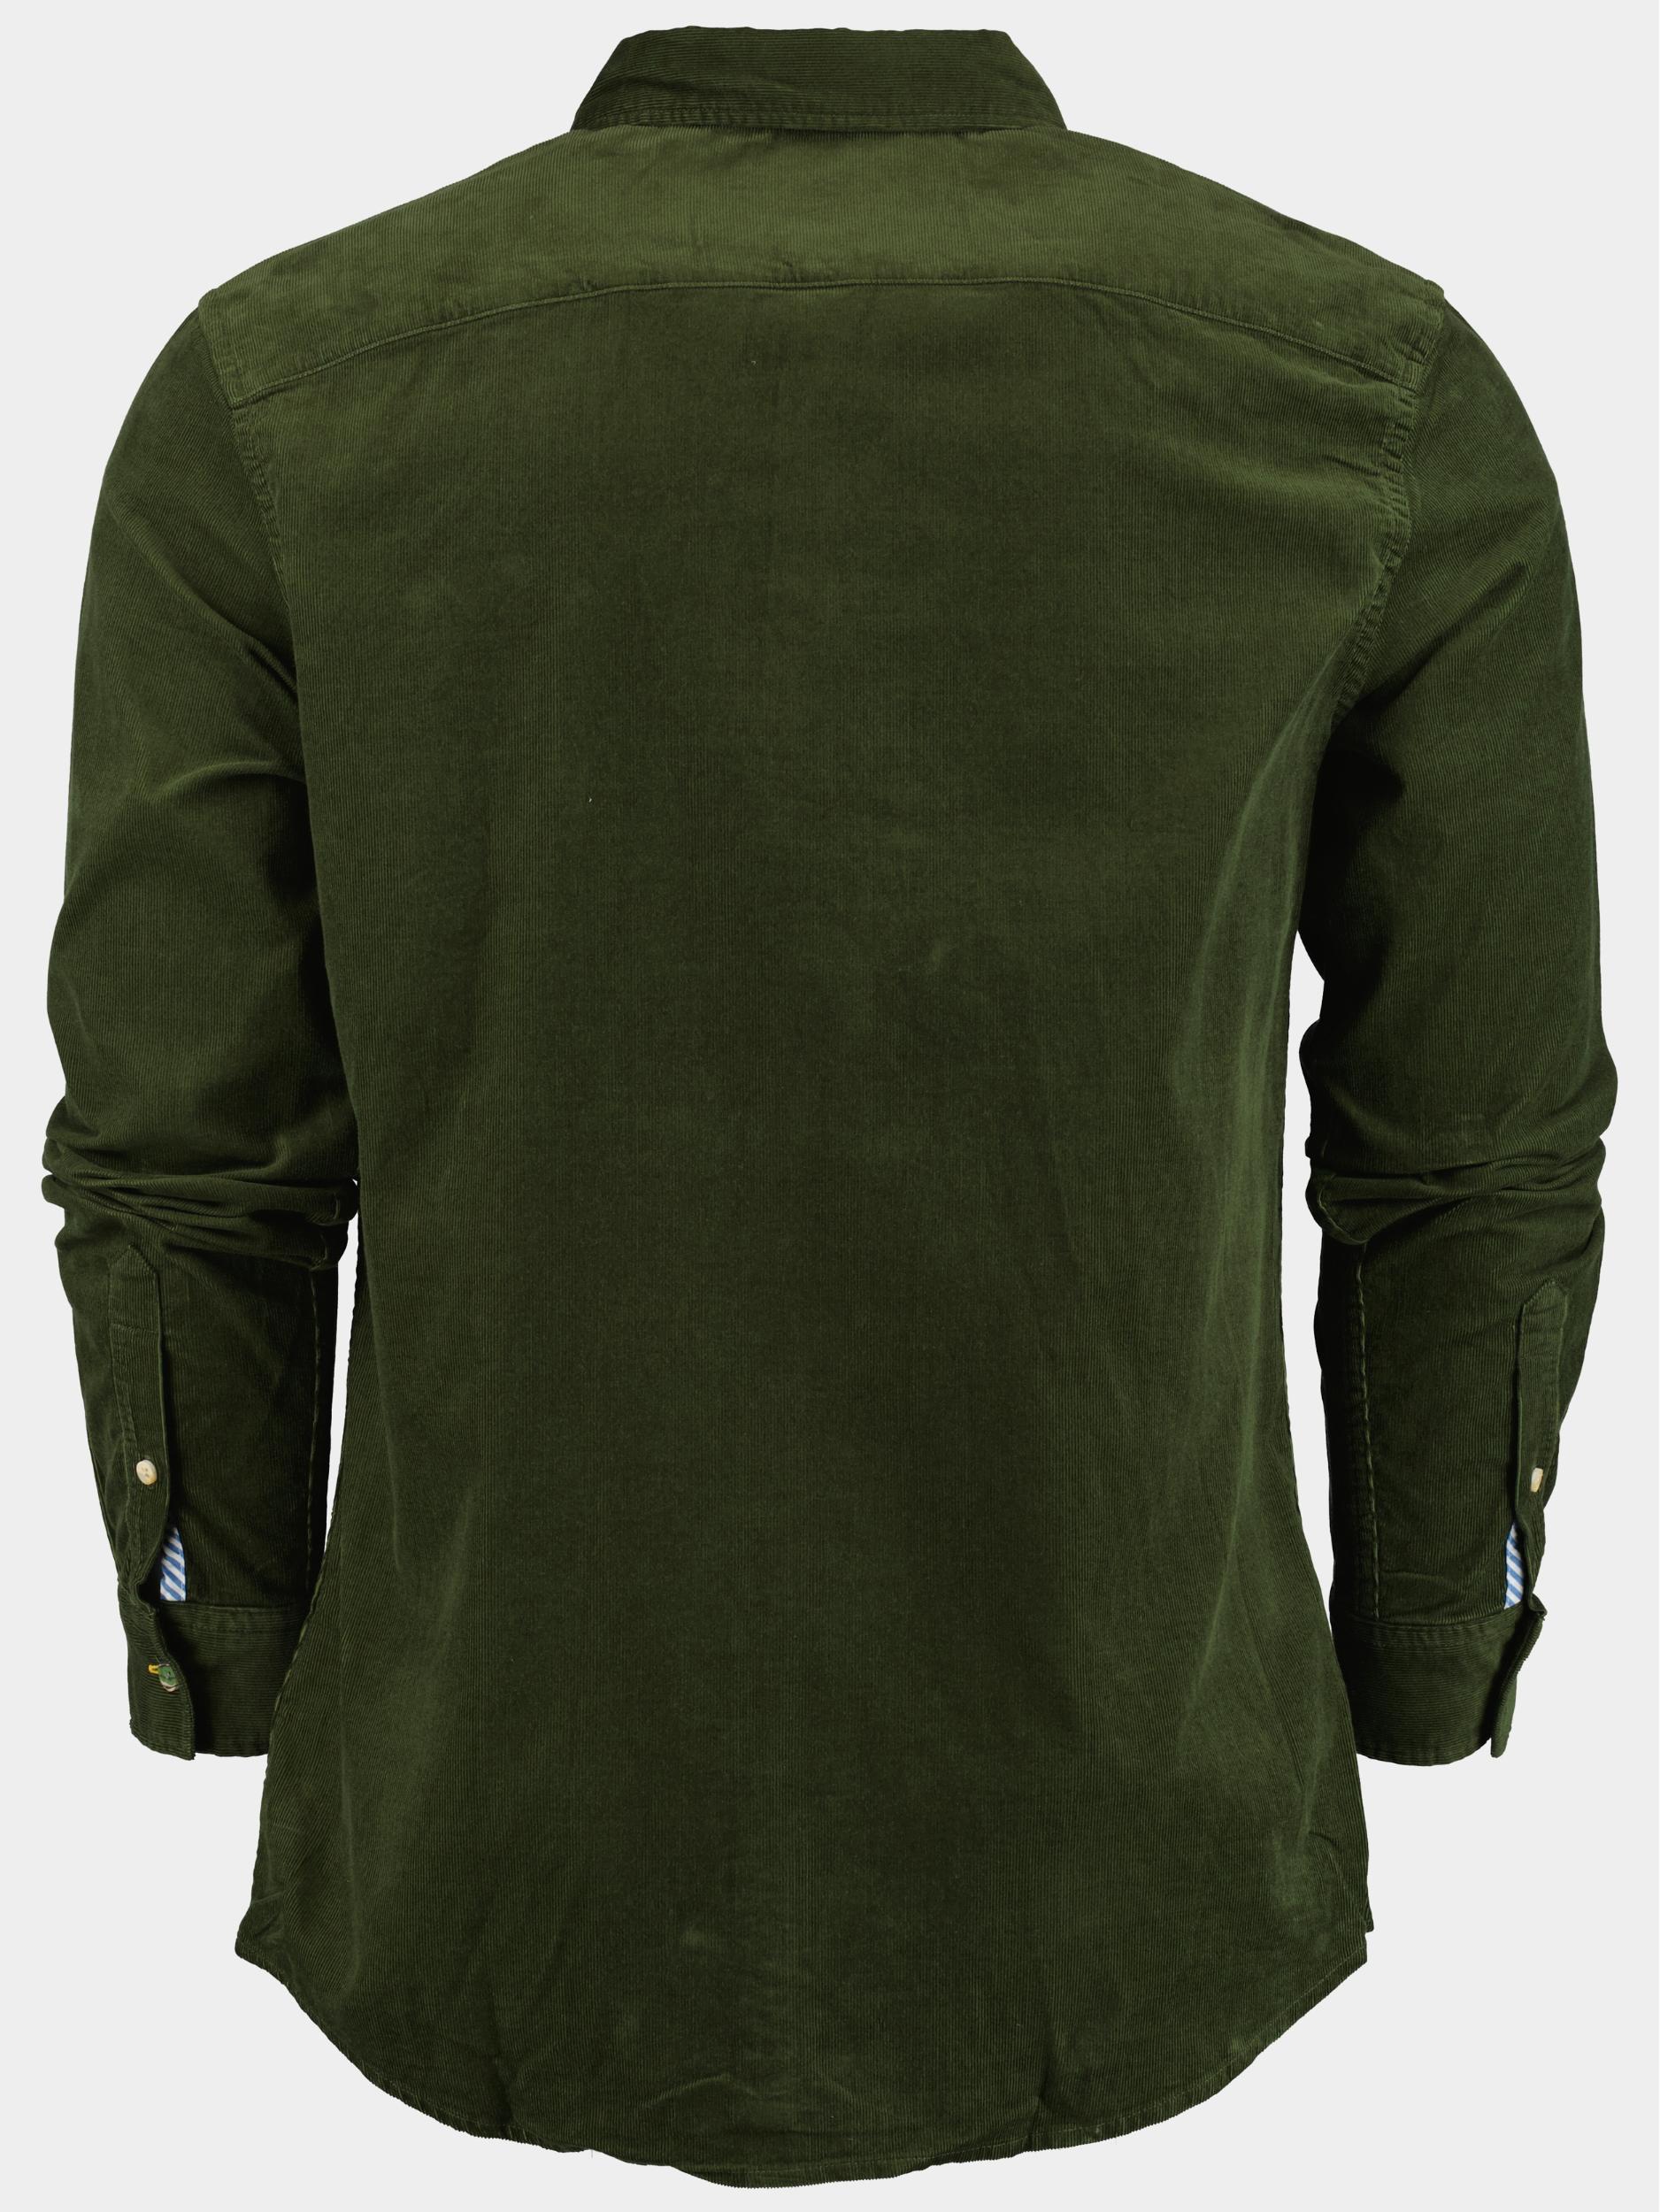 Scotch & Soda Casual hemd lange mouw Groen Fine corduroy shirt - slim fit 173080/4876